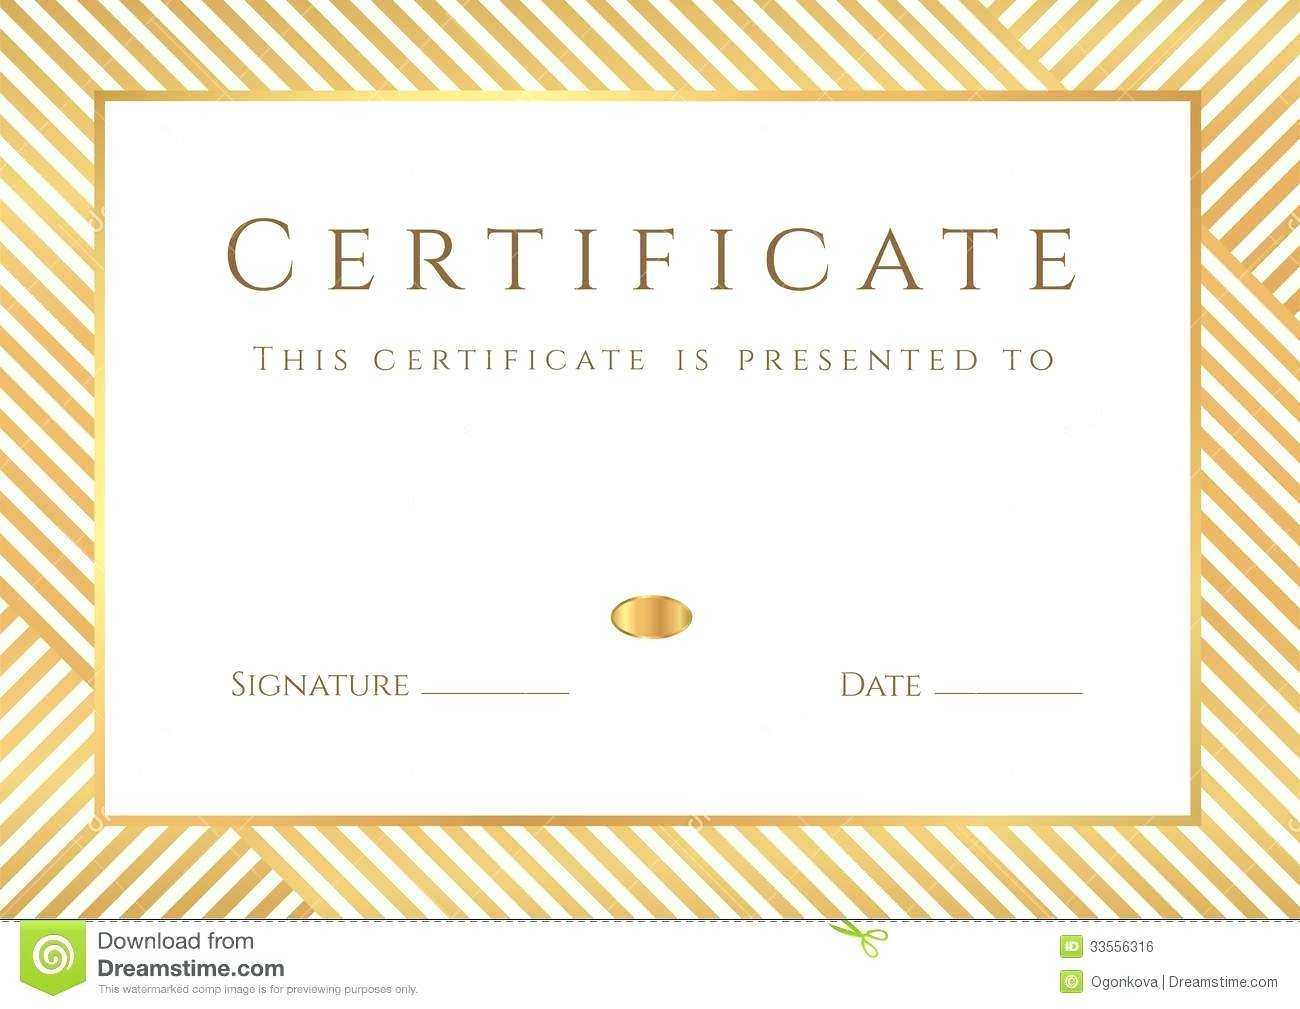 Superlative Certificate Template Excellent Nice Superlative With Regard To Superlative Certificate Template